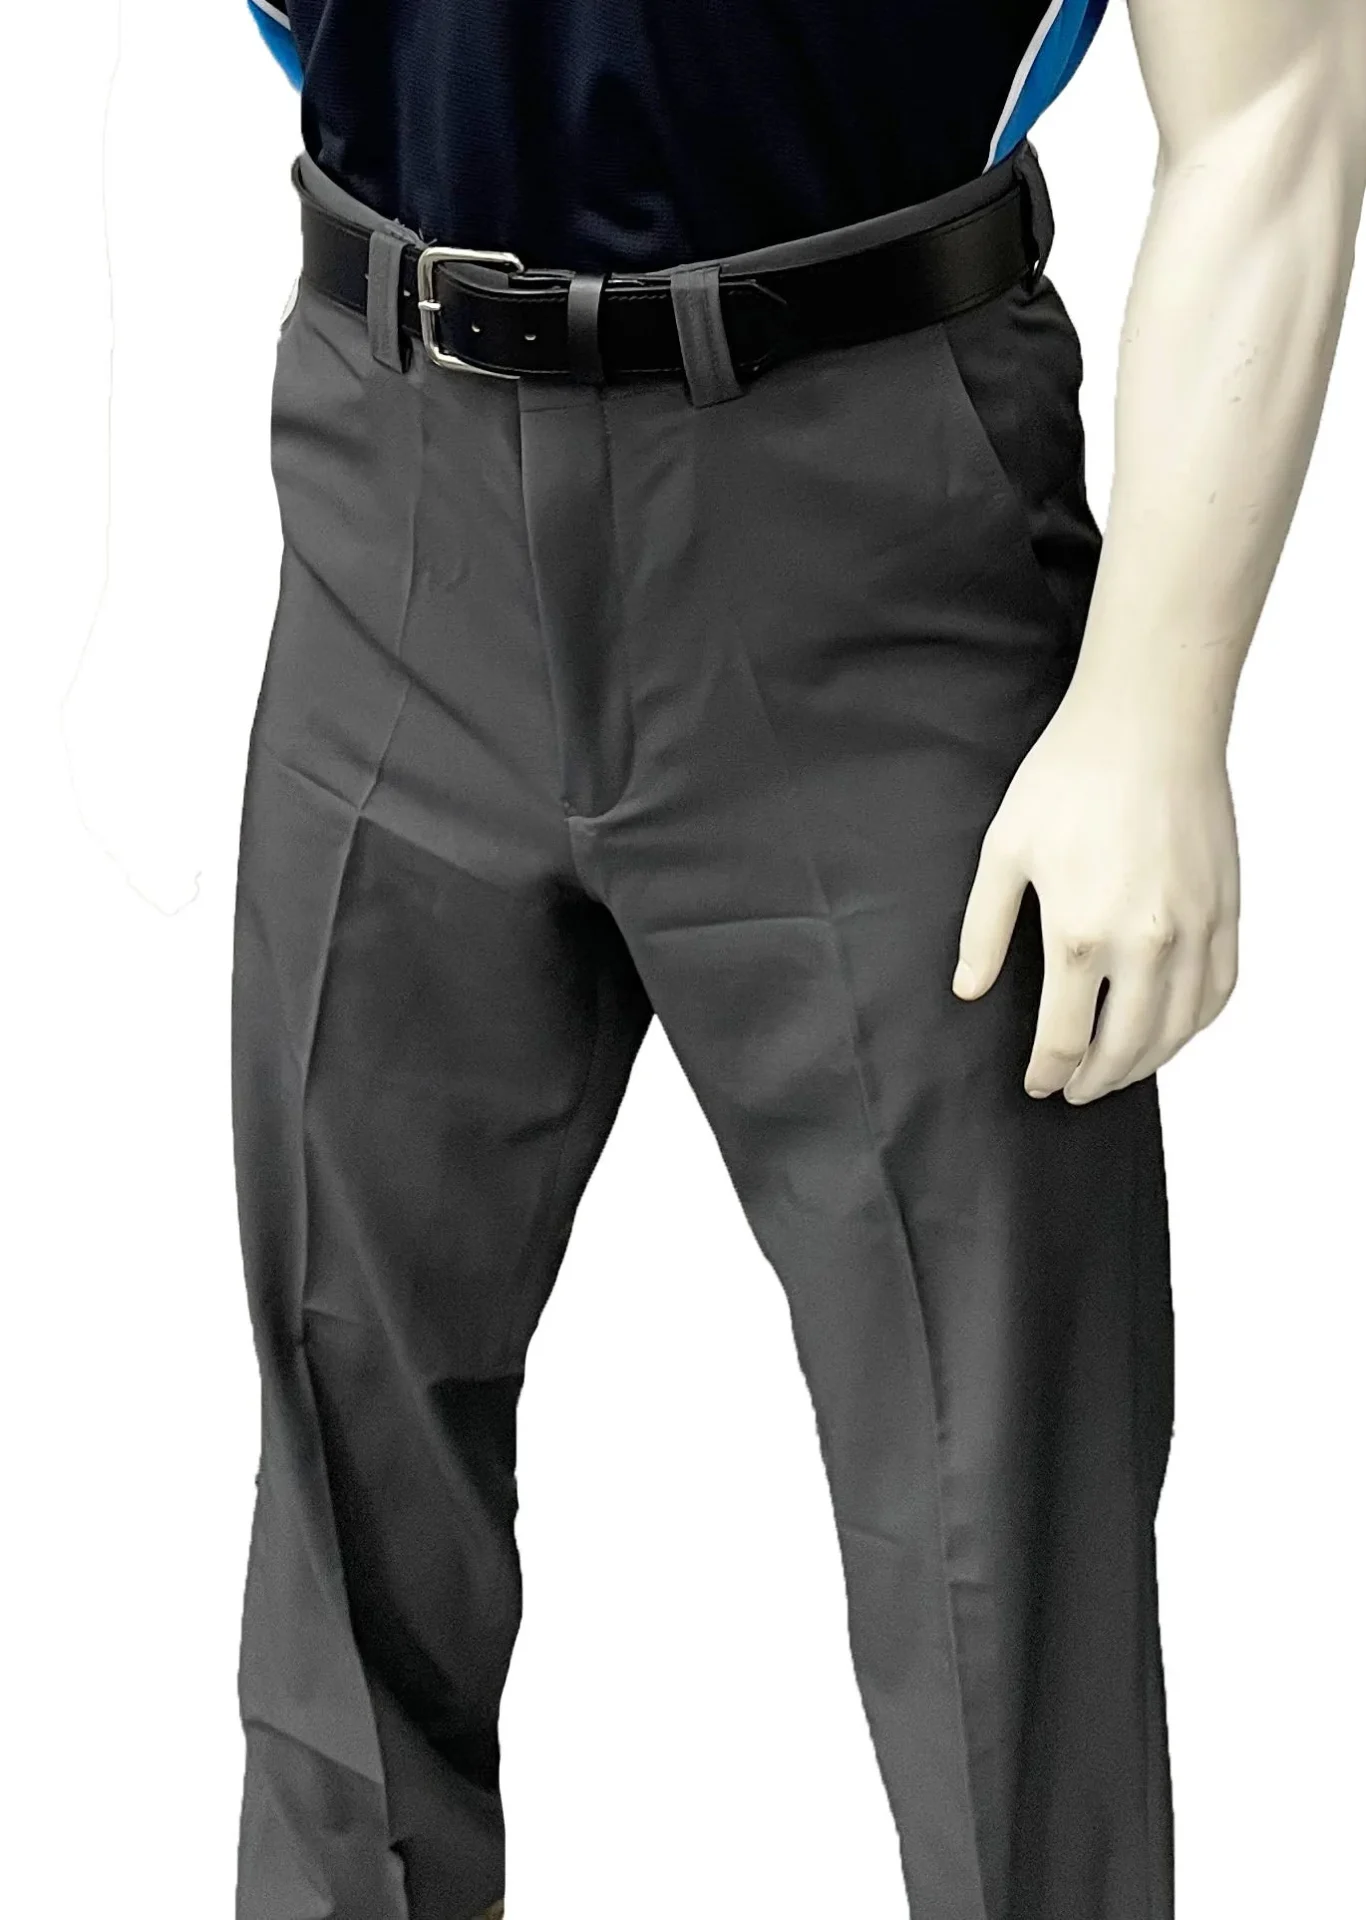 A man wearing black pants and white shirt.